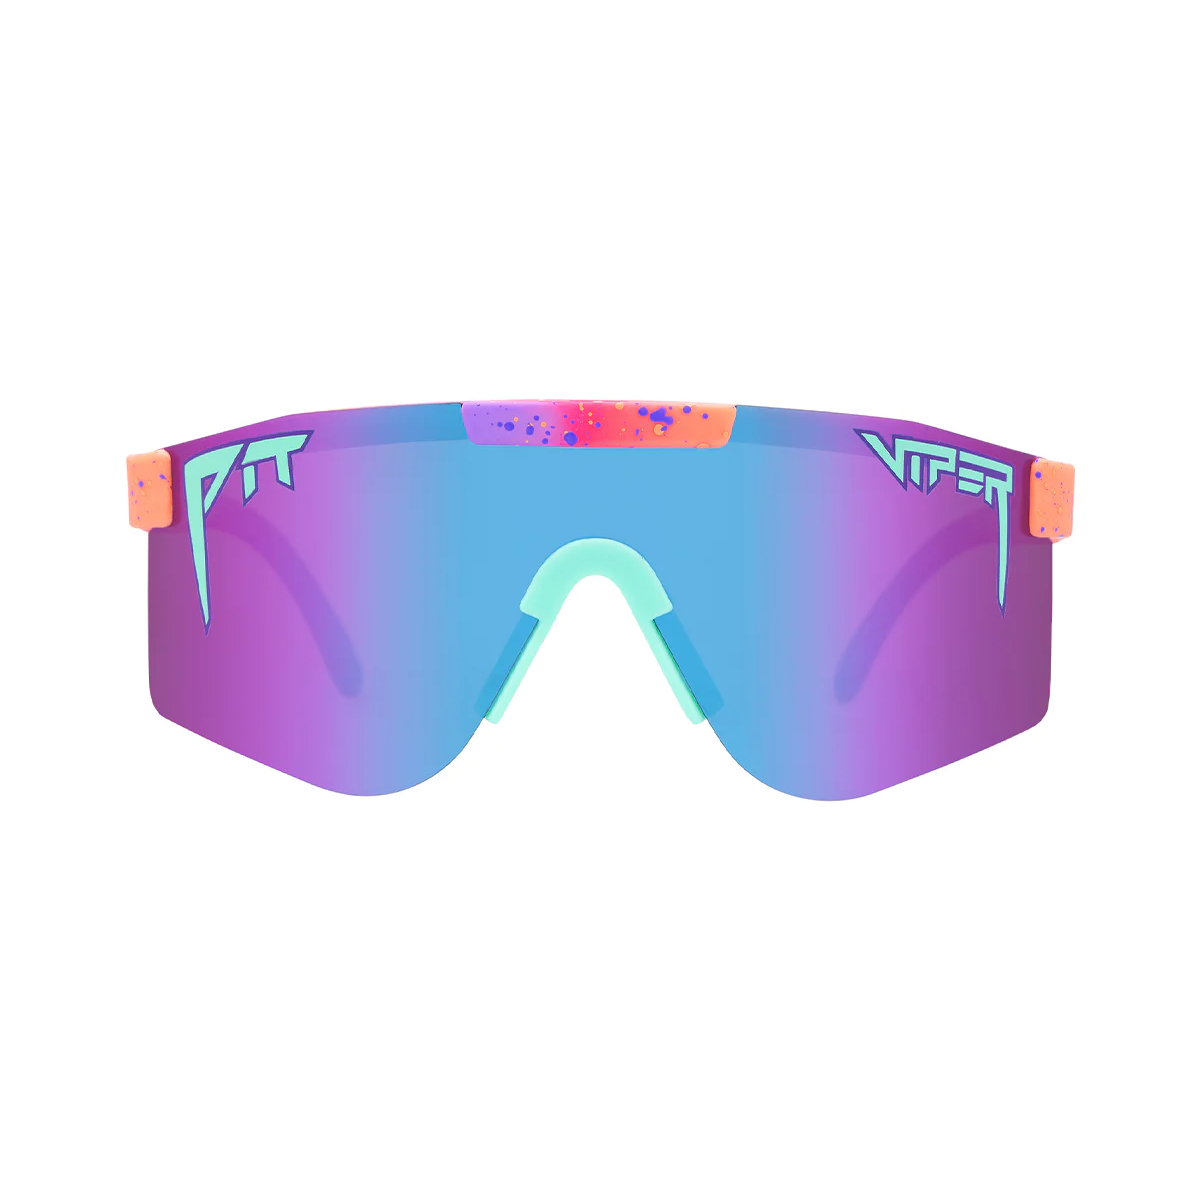 Gafas de sol Pit Viper Flip-Offs The Copacabana polarizadas color rosa y azul